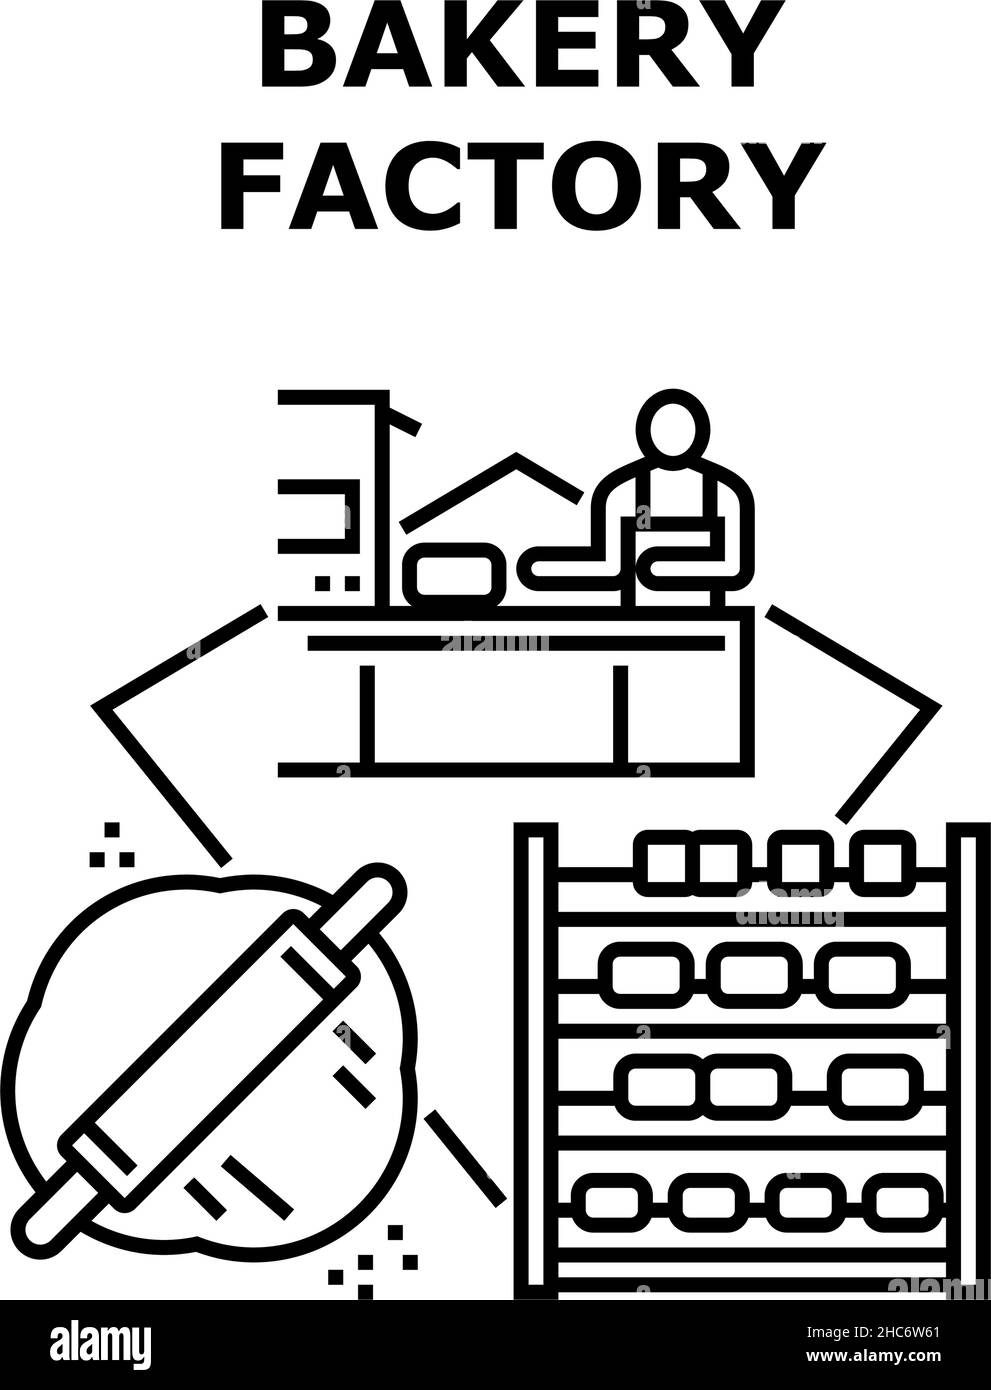 Bakery Factory Vector Concept Black Illustration Stock Vector